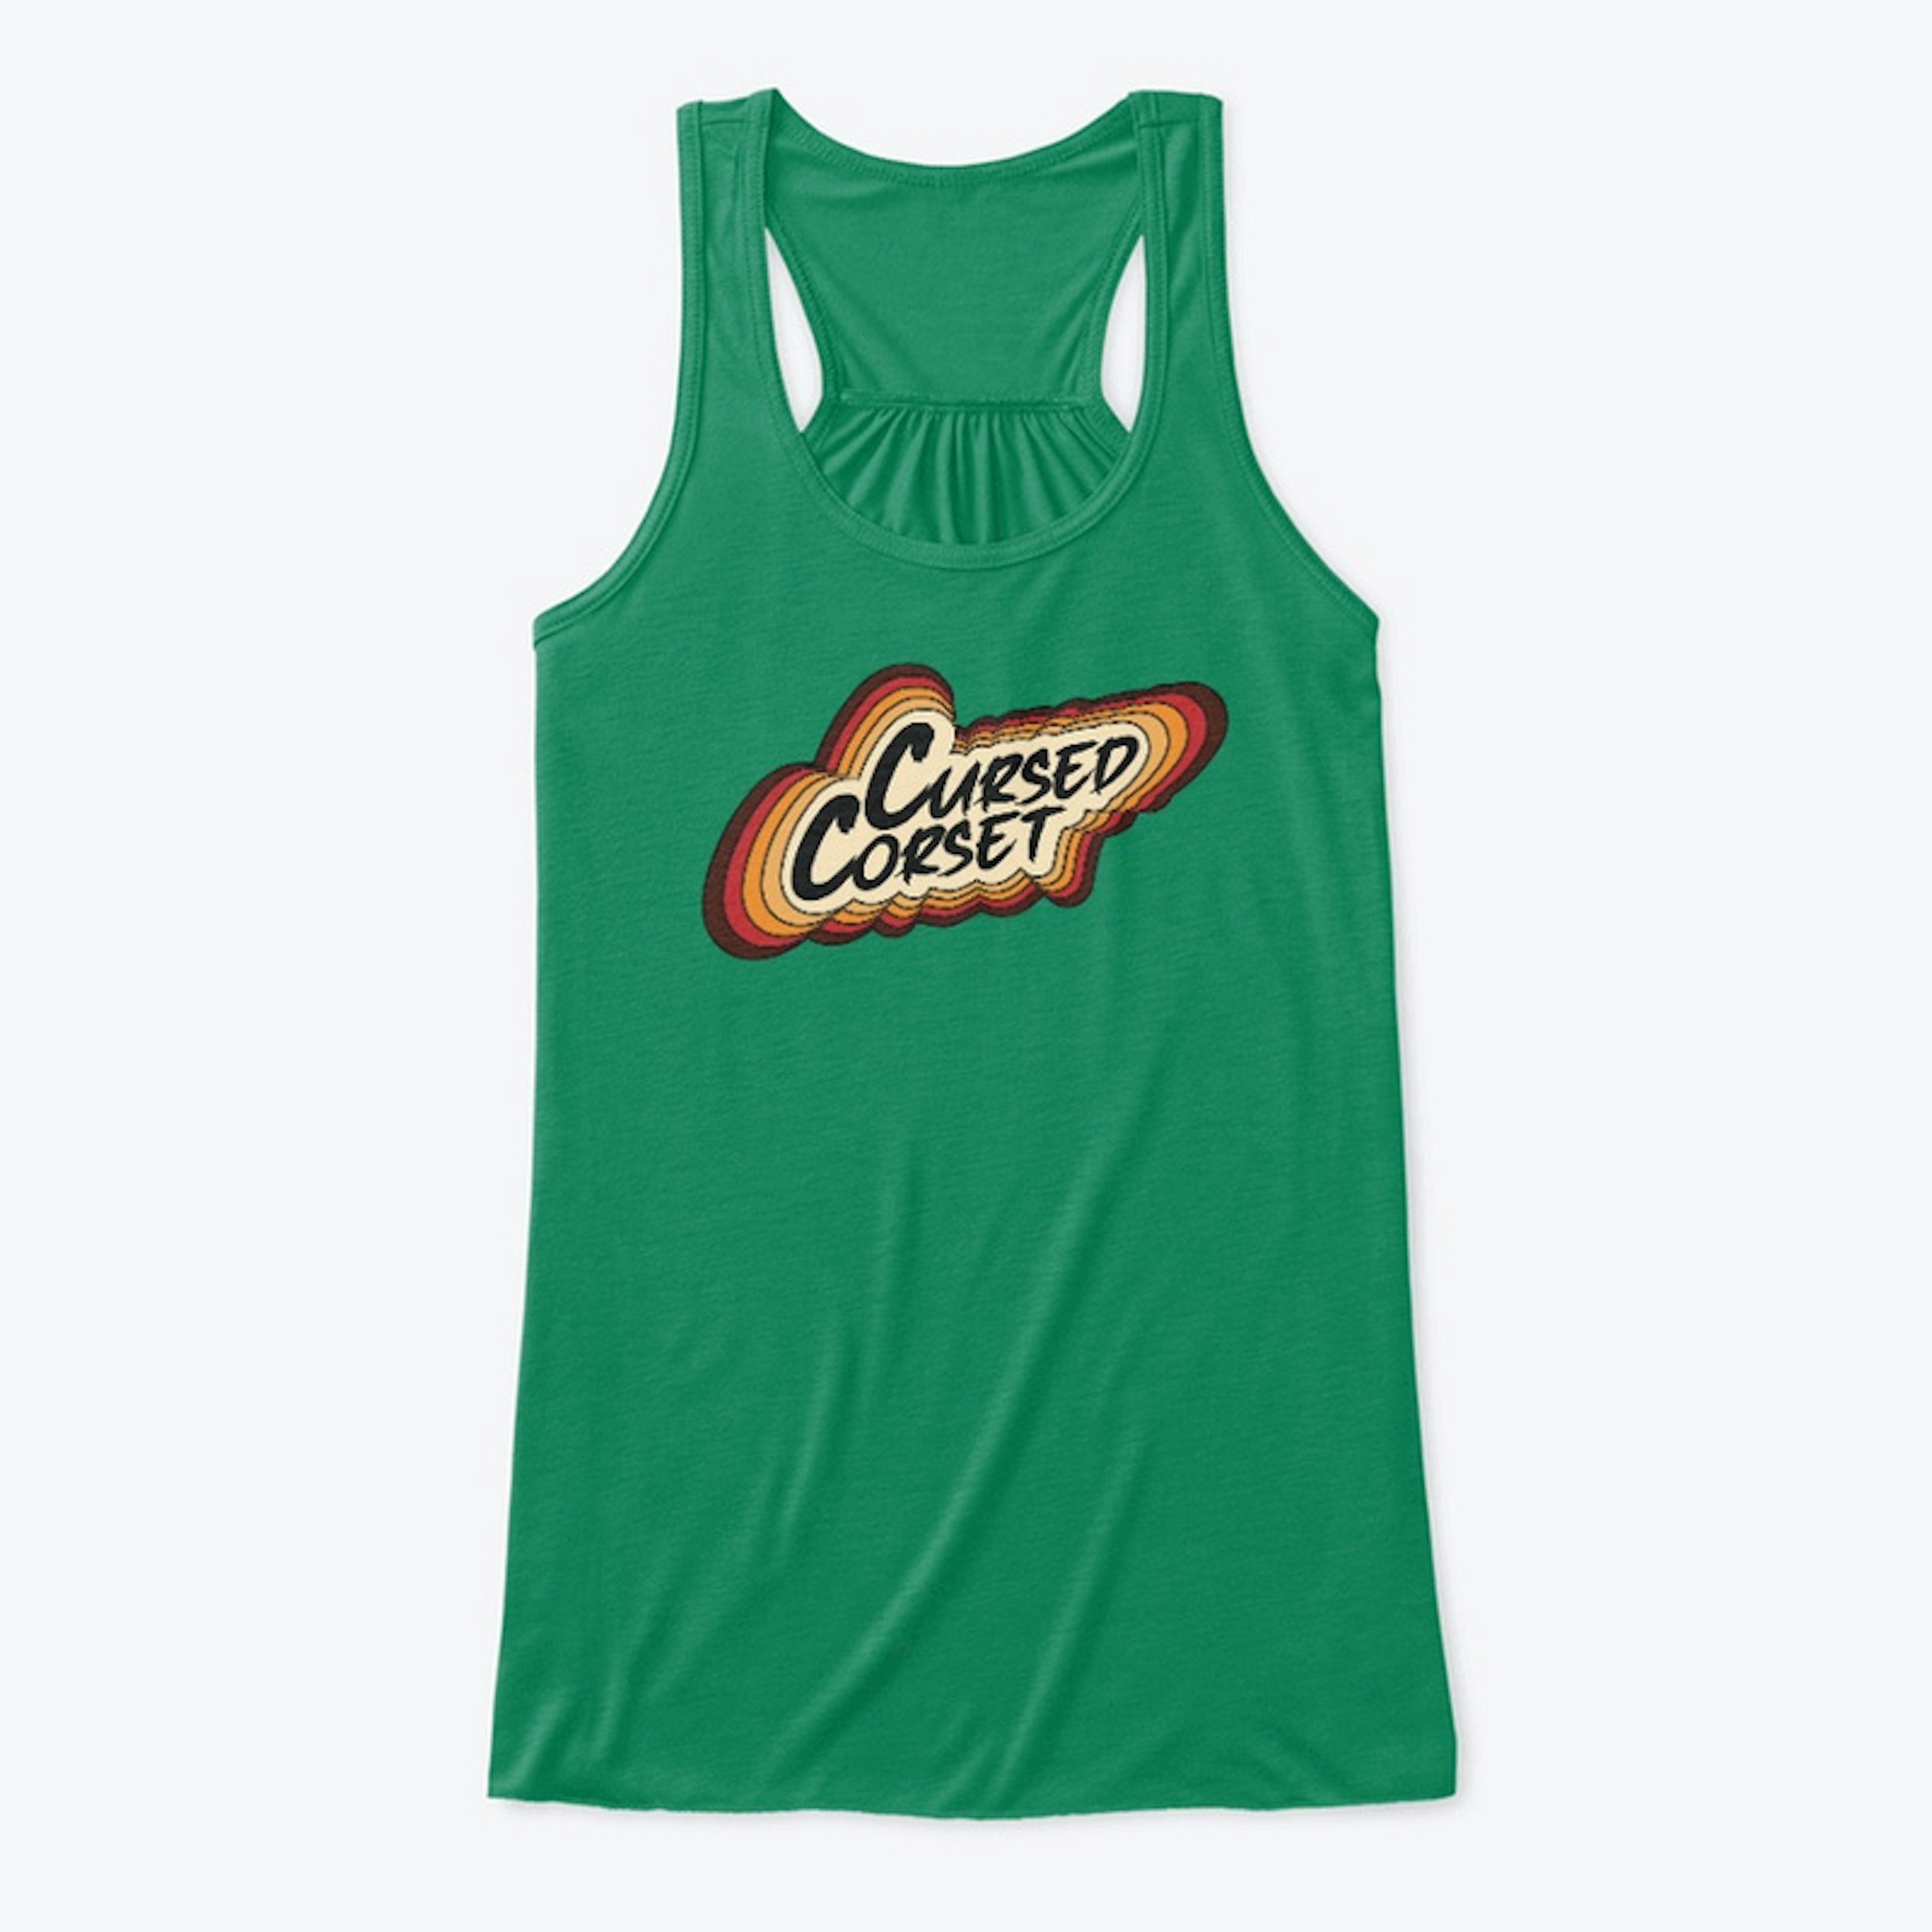 Cursed Corset Retro Logo Tank Top